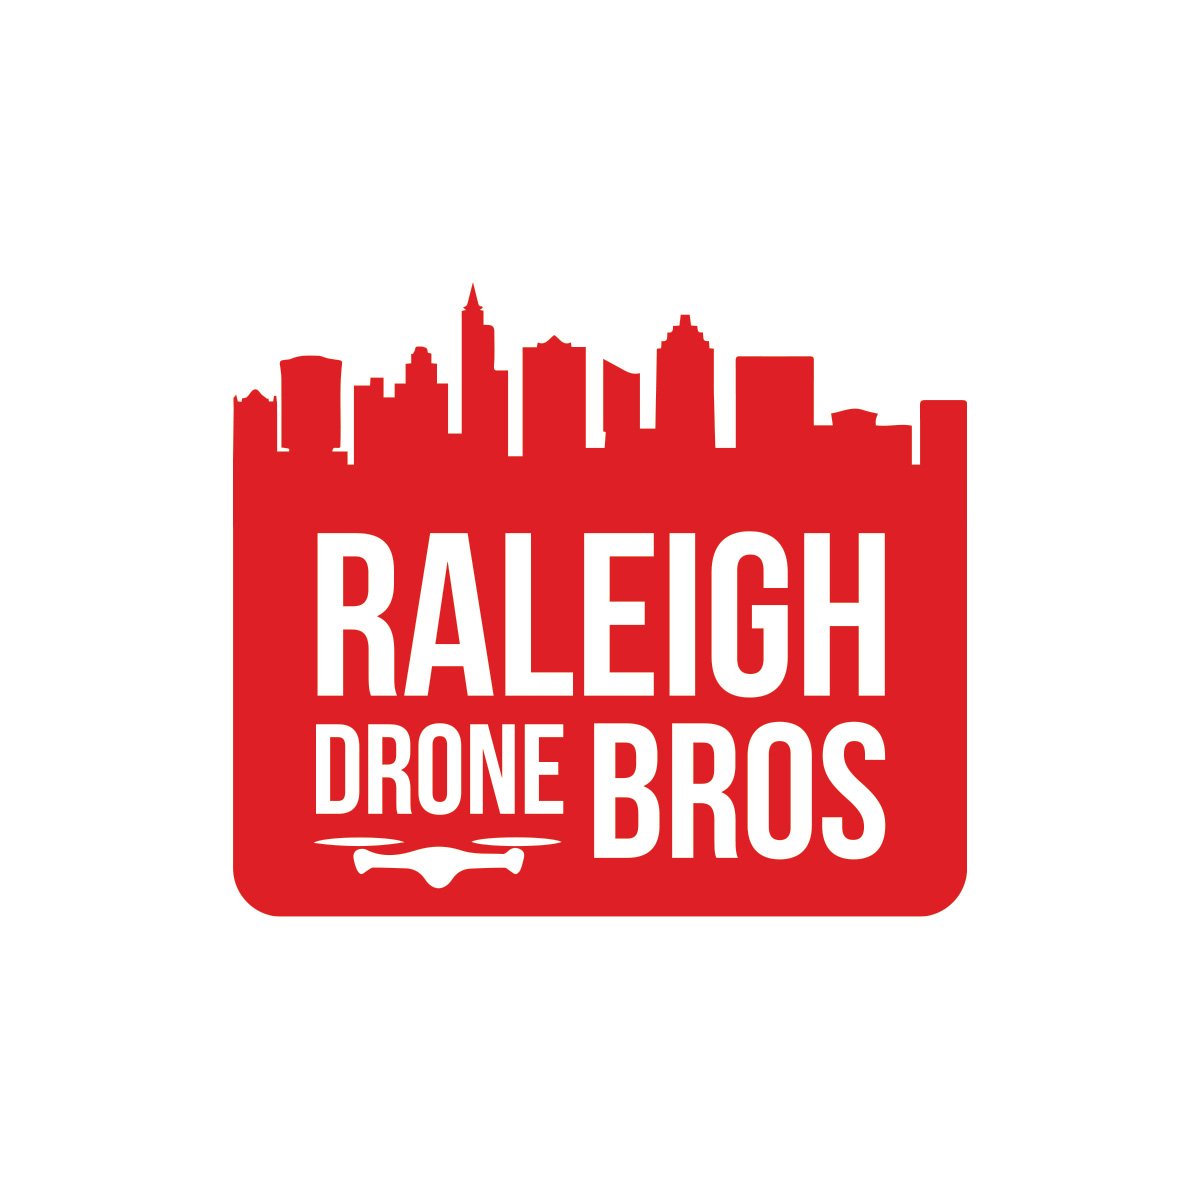 drone bros logo.jpg